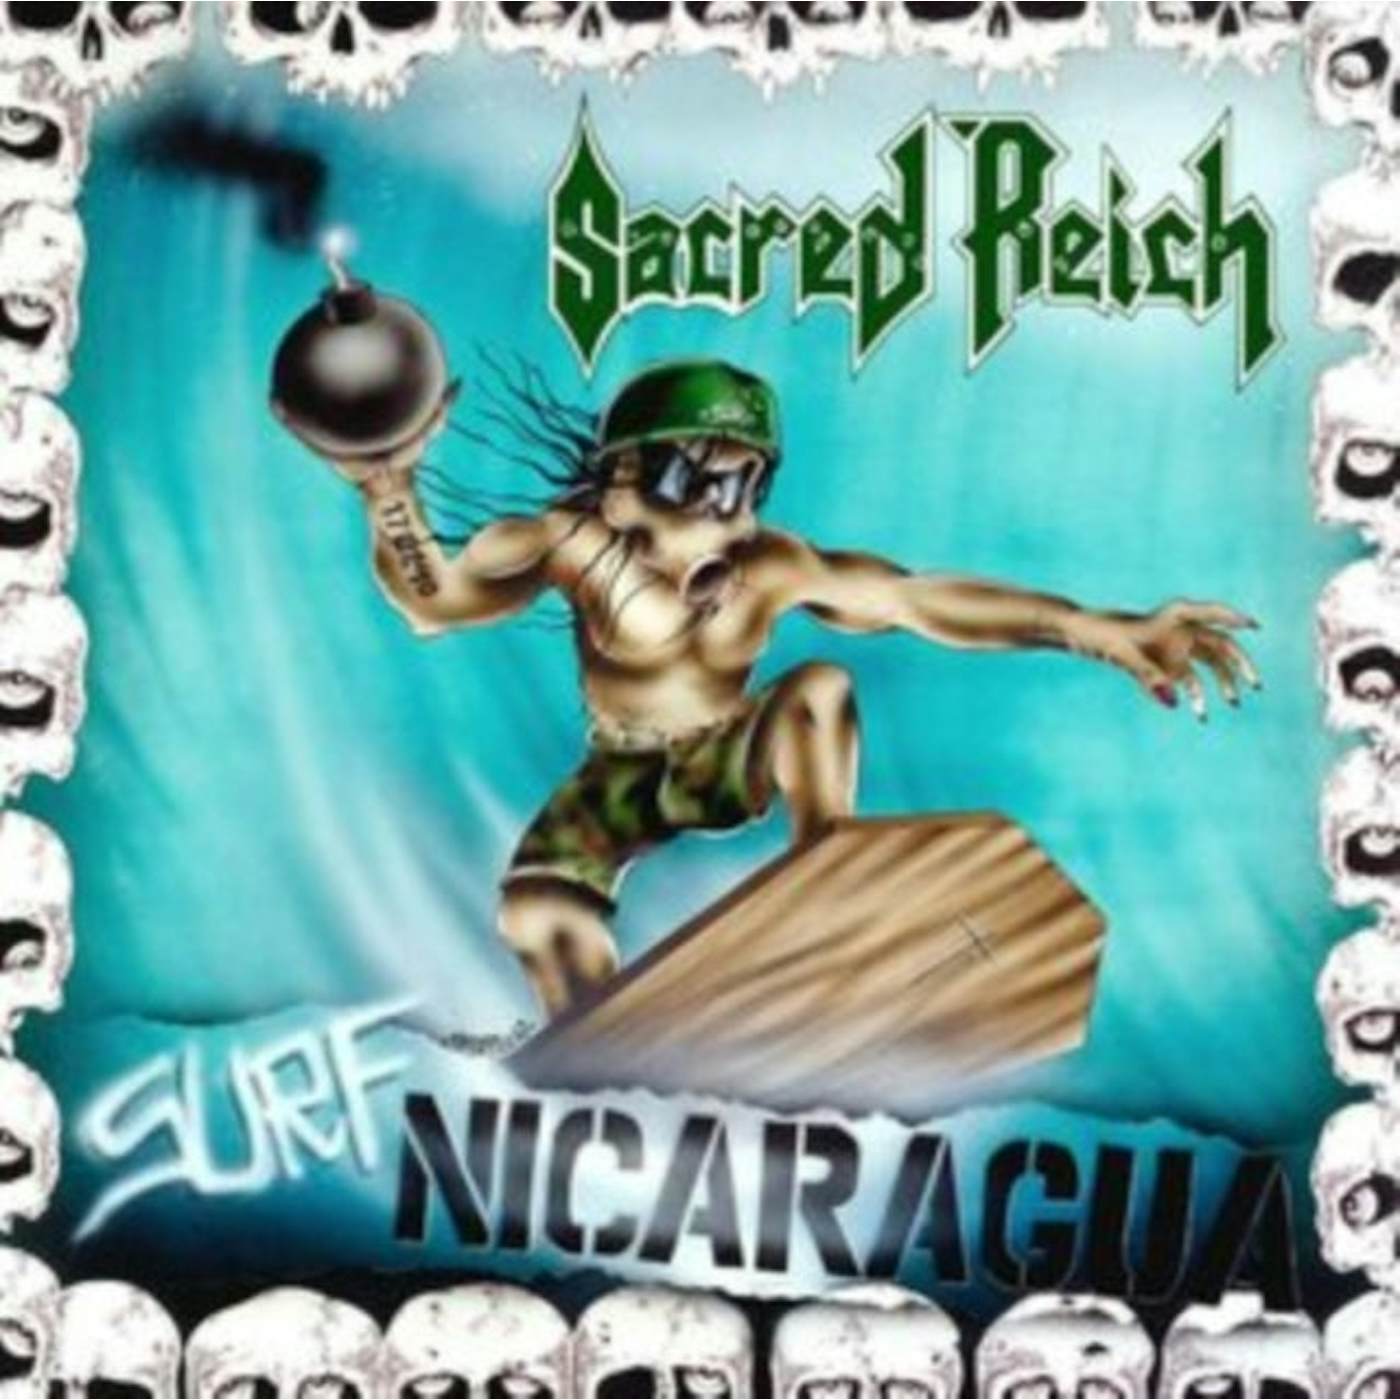 Sacred Reich LP - Surf Nicaragua (Vinyl)